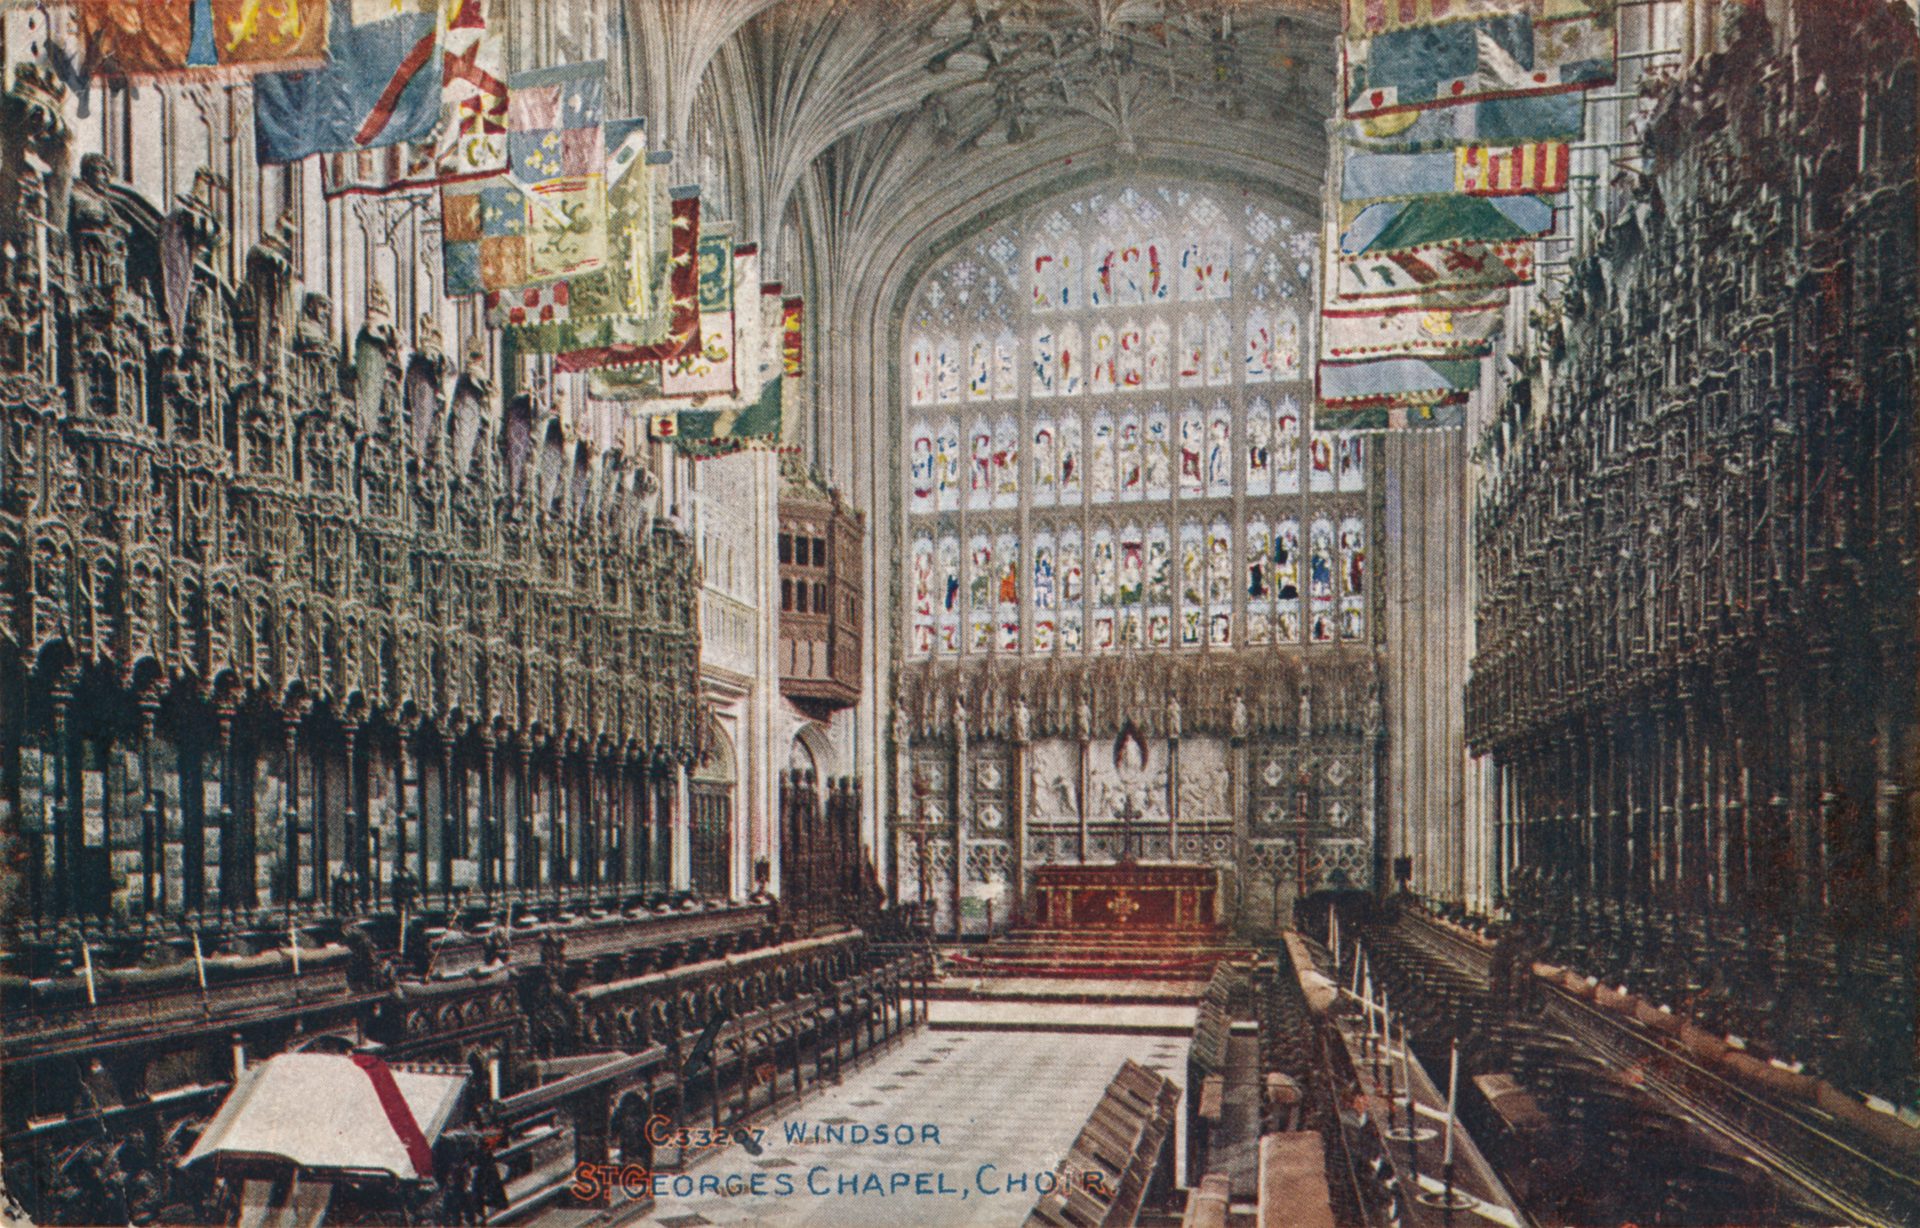 Windsor, St. George's Chapel, Choir' c1916